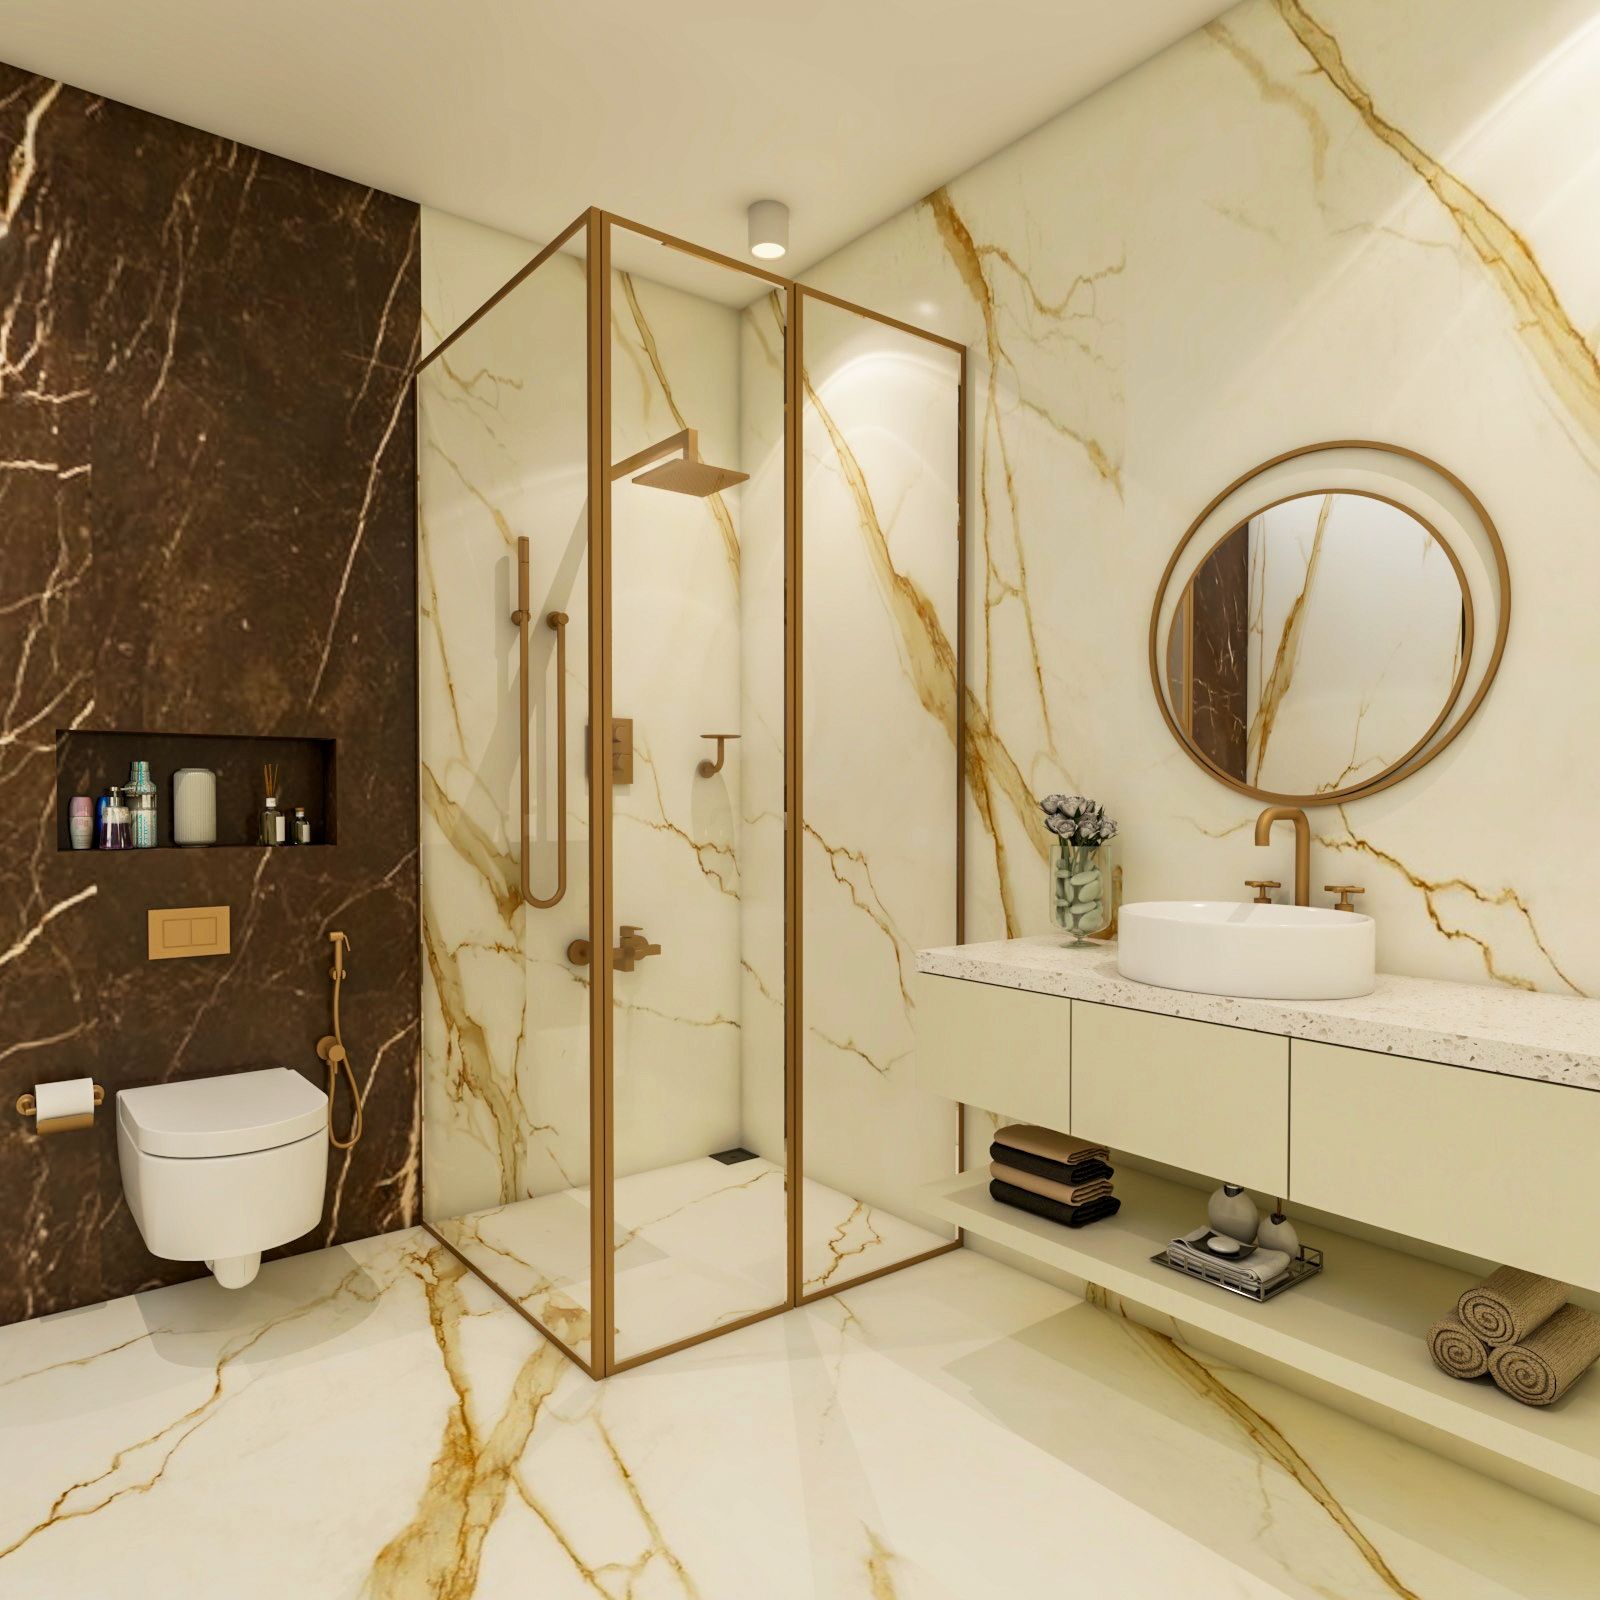 Contemporary Bathroom Design With Corian Bathroom Countertop And White Cabinet